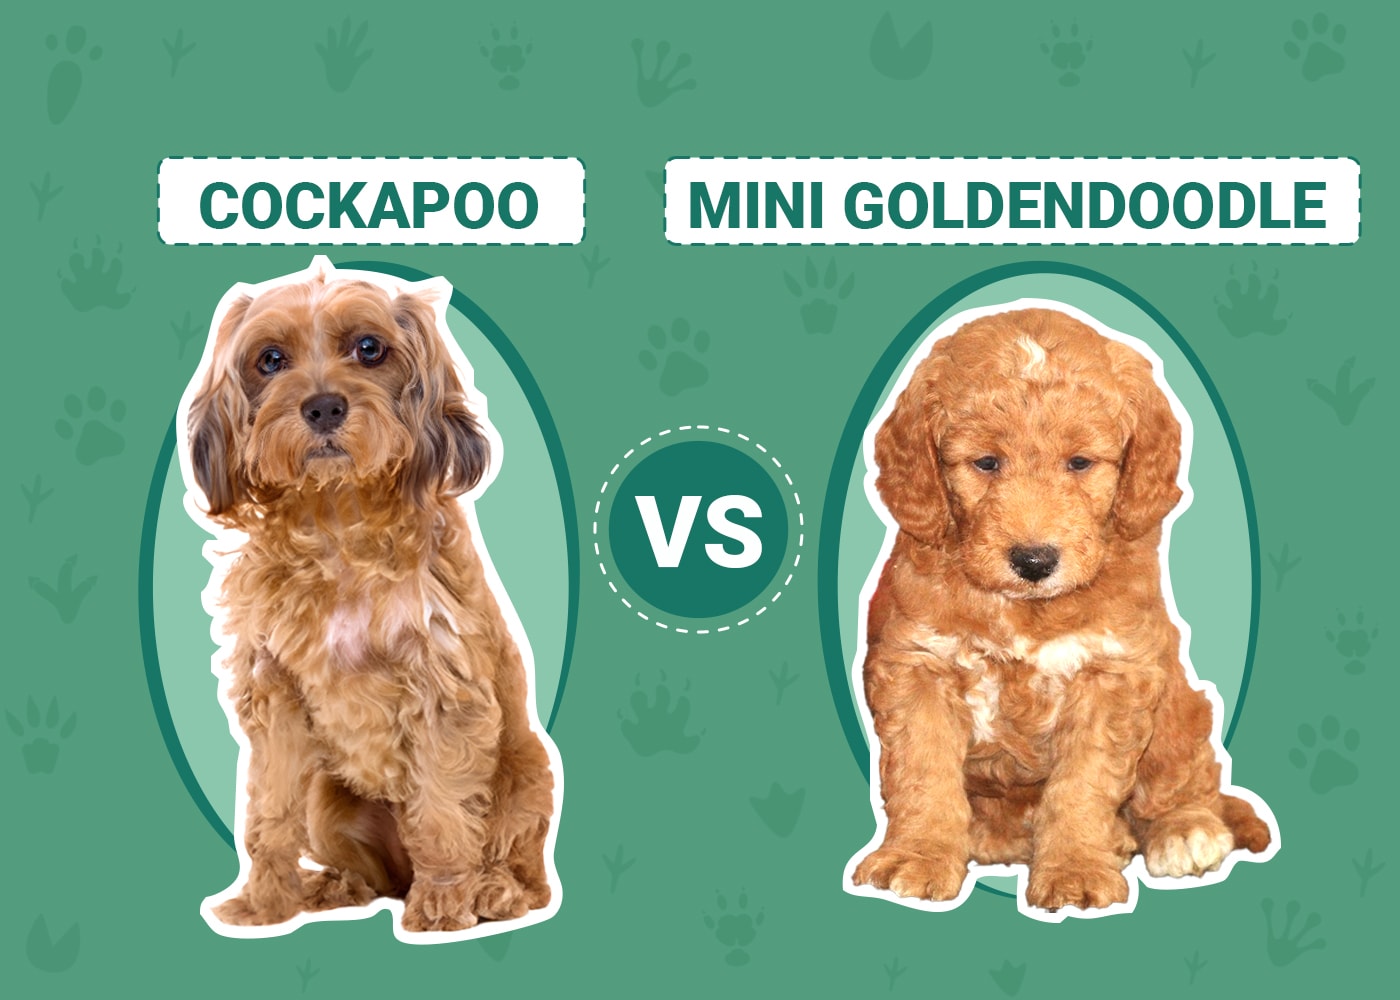 Cockapoo vs Mini Goldendoodle